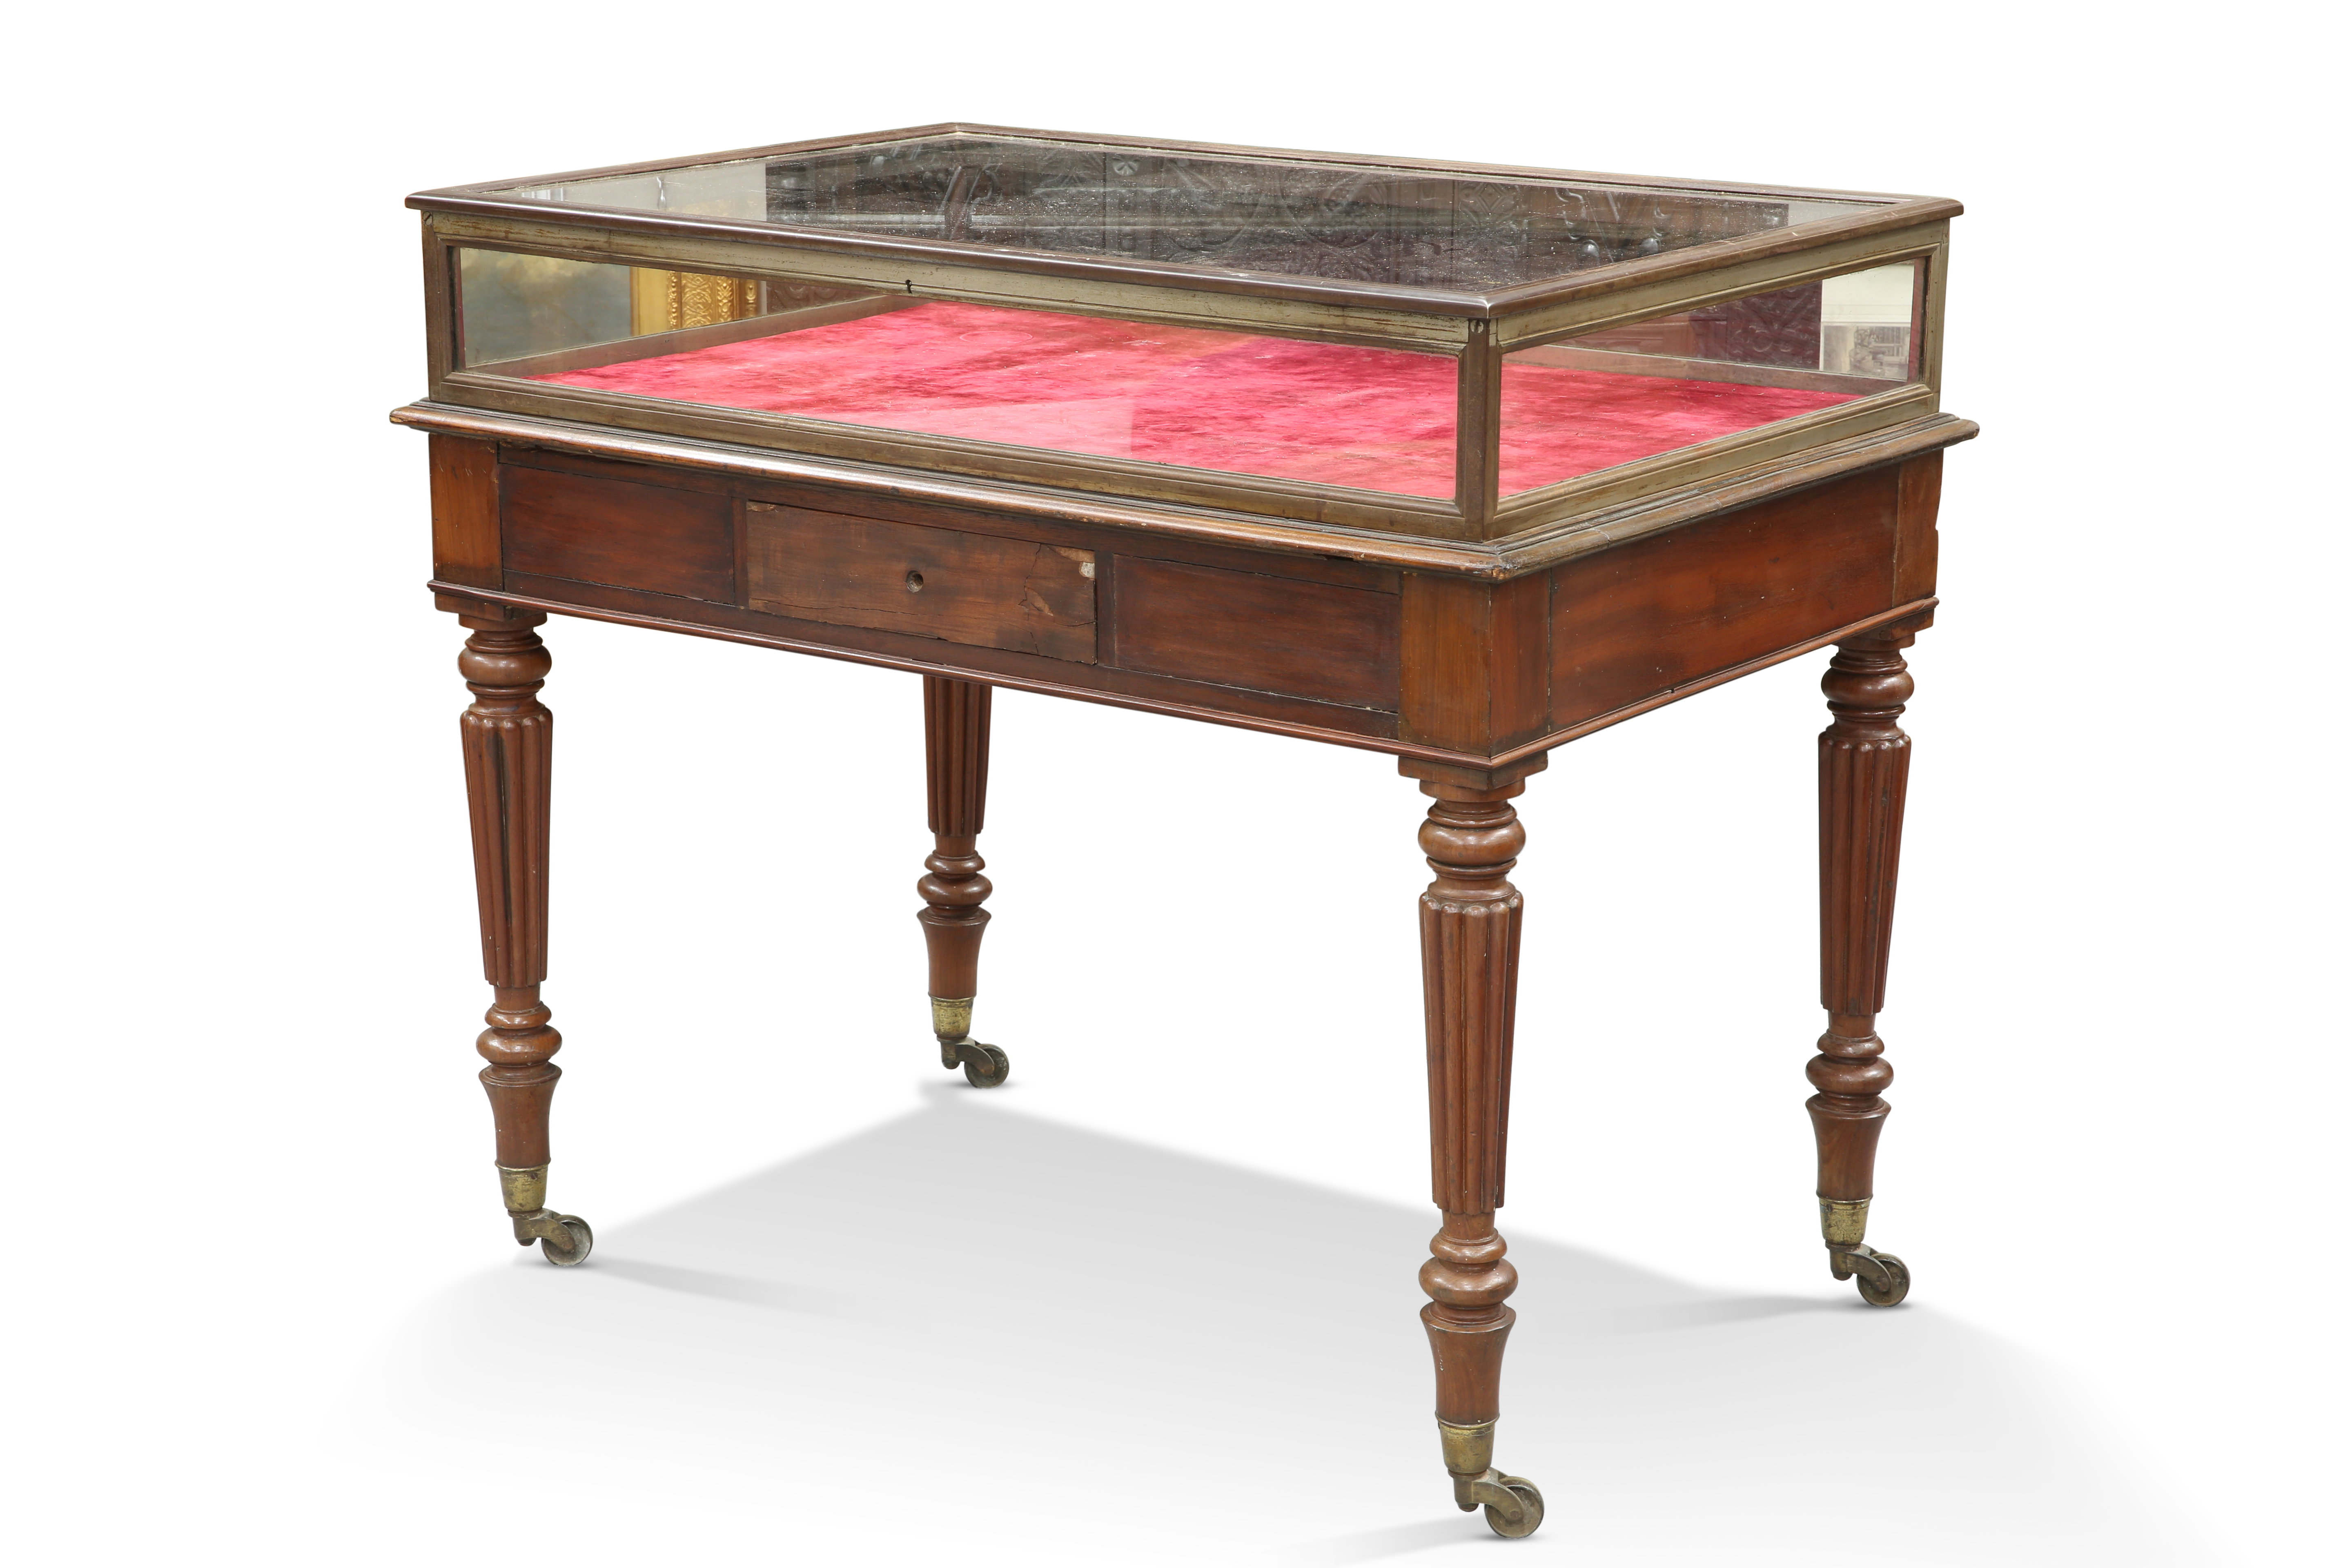 A 19TH CENTURY MAHOGANY DISPLAY TABLE, BY GILLOWS